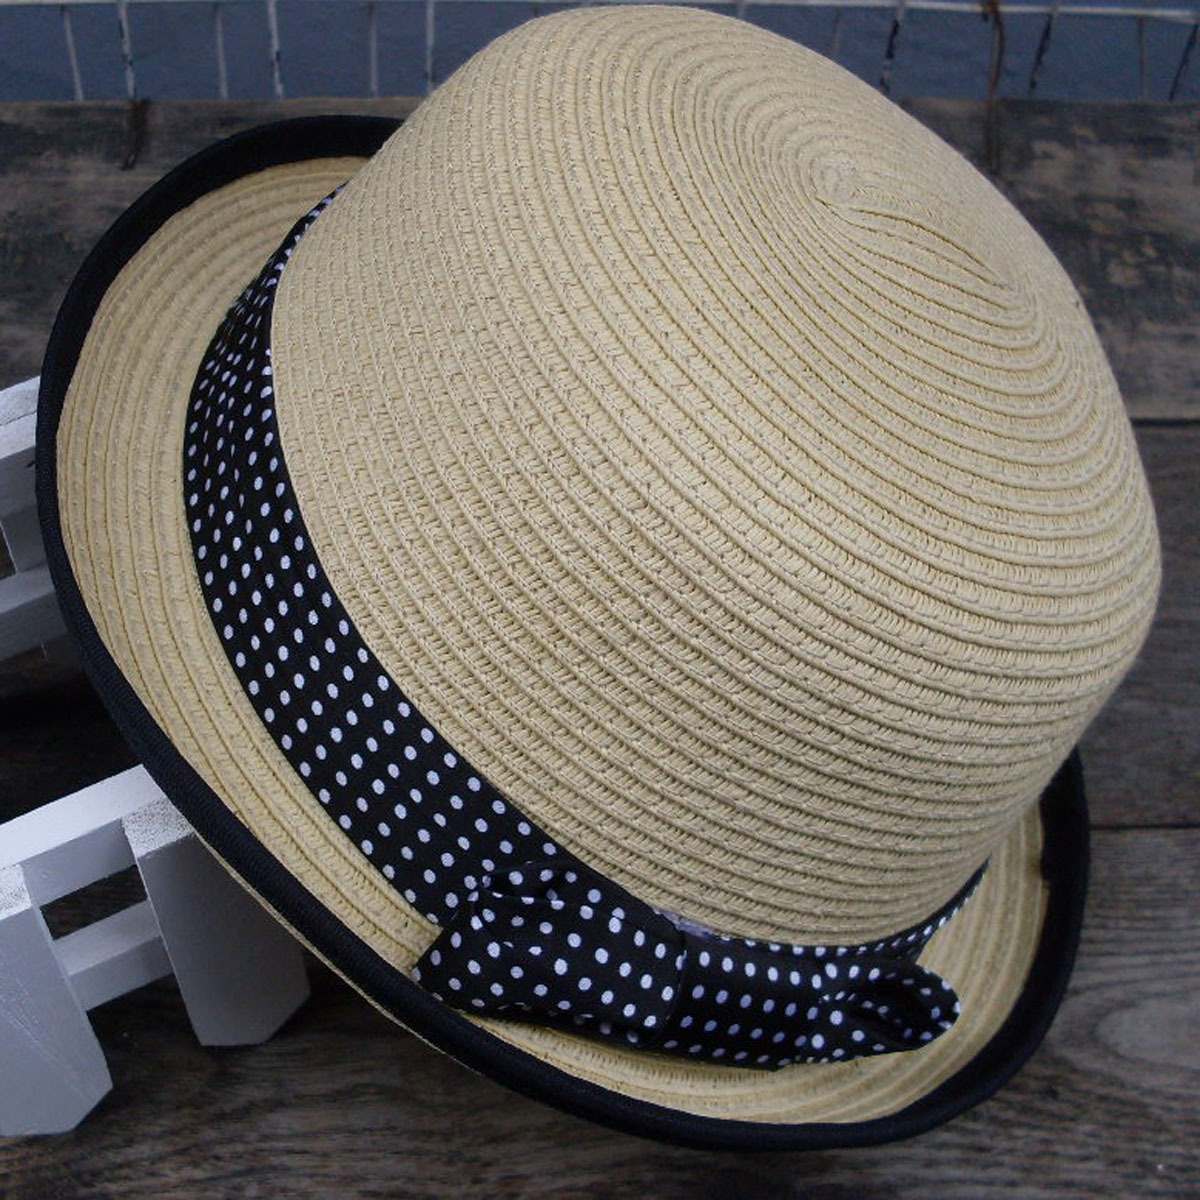 Roll-up hem dot bow strawhat summer sunbonnet women's sun hat fashion hat